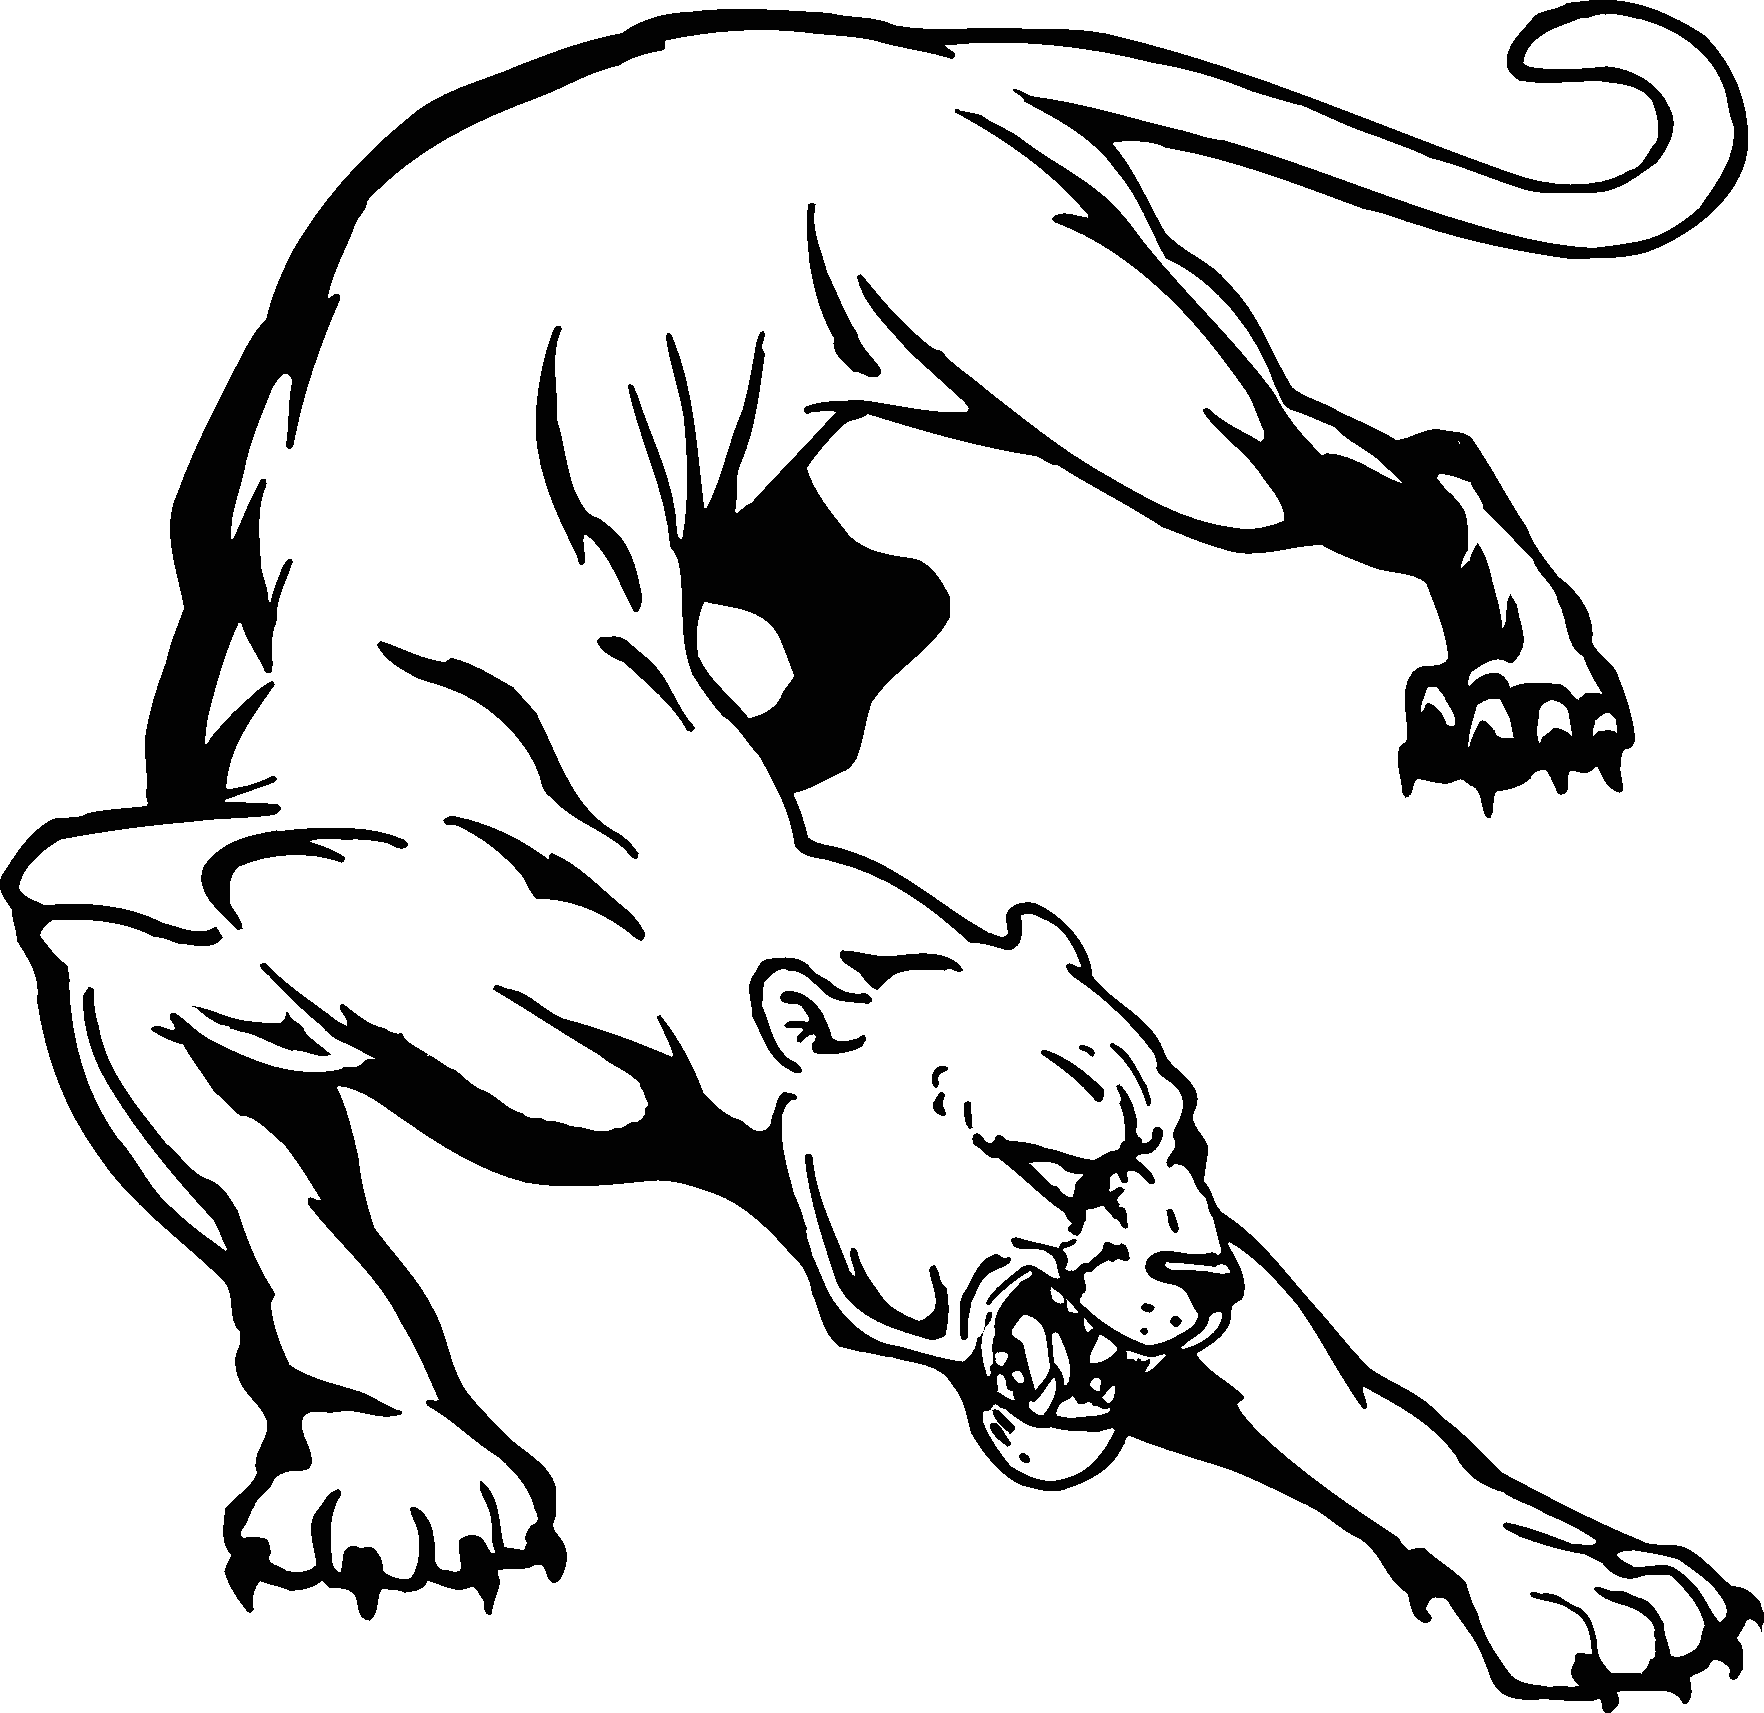 White Panther Logo - Free Black Panther Clipart, Download Free Clip Art, Free Clip Art on ...